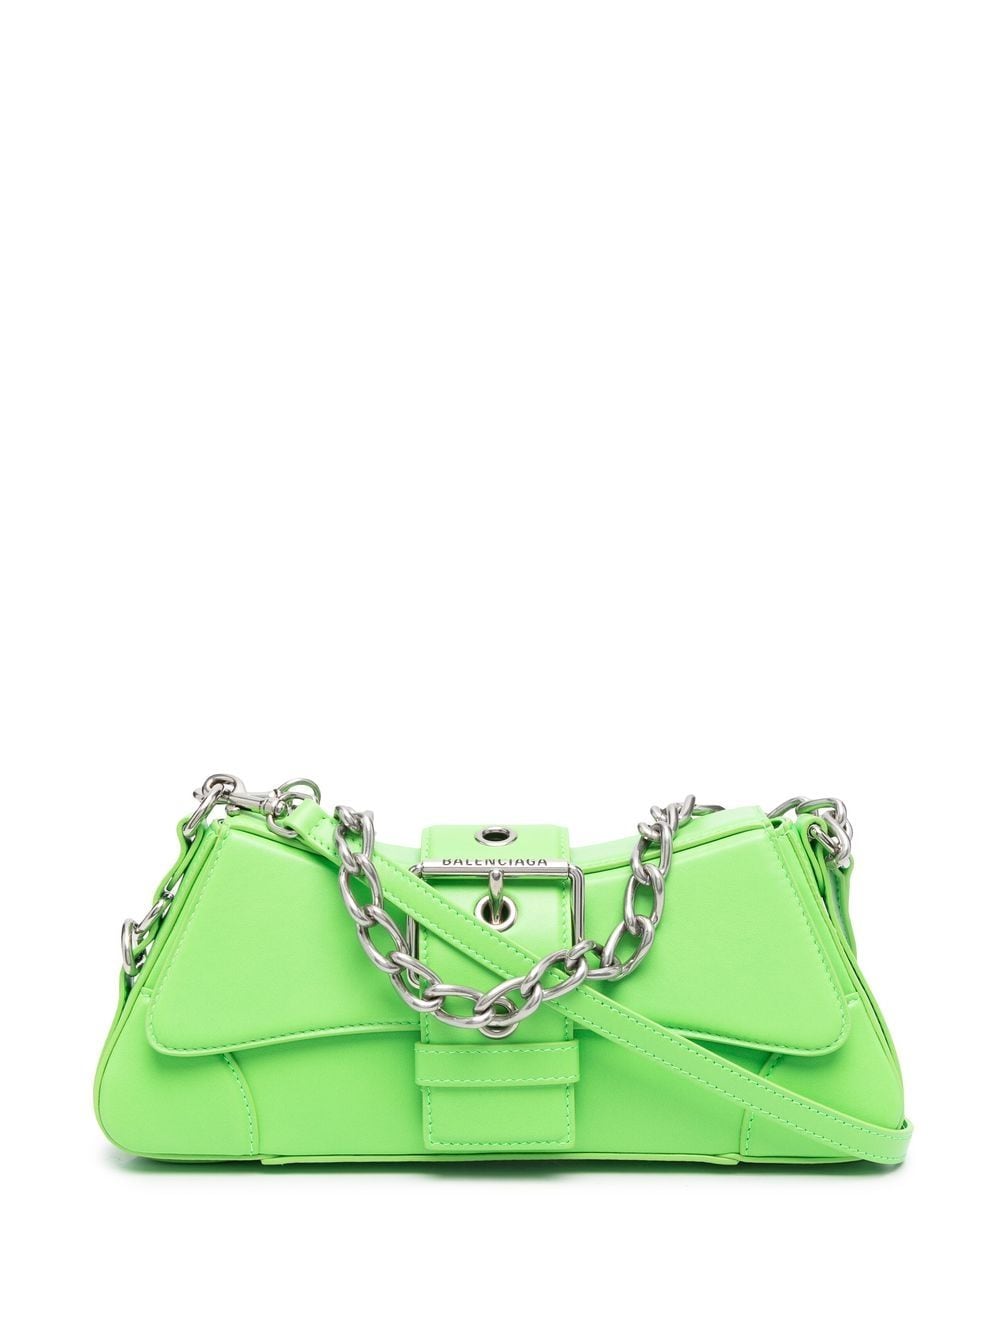 Balenciaga Lindsay leather shoulder bag - Green